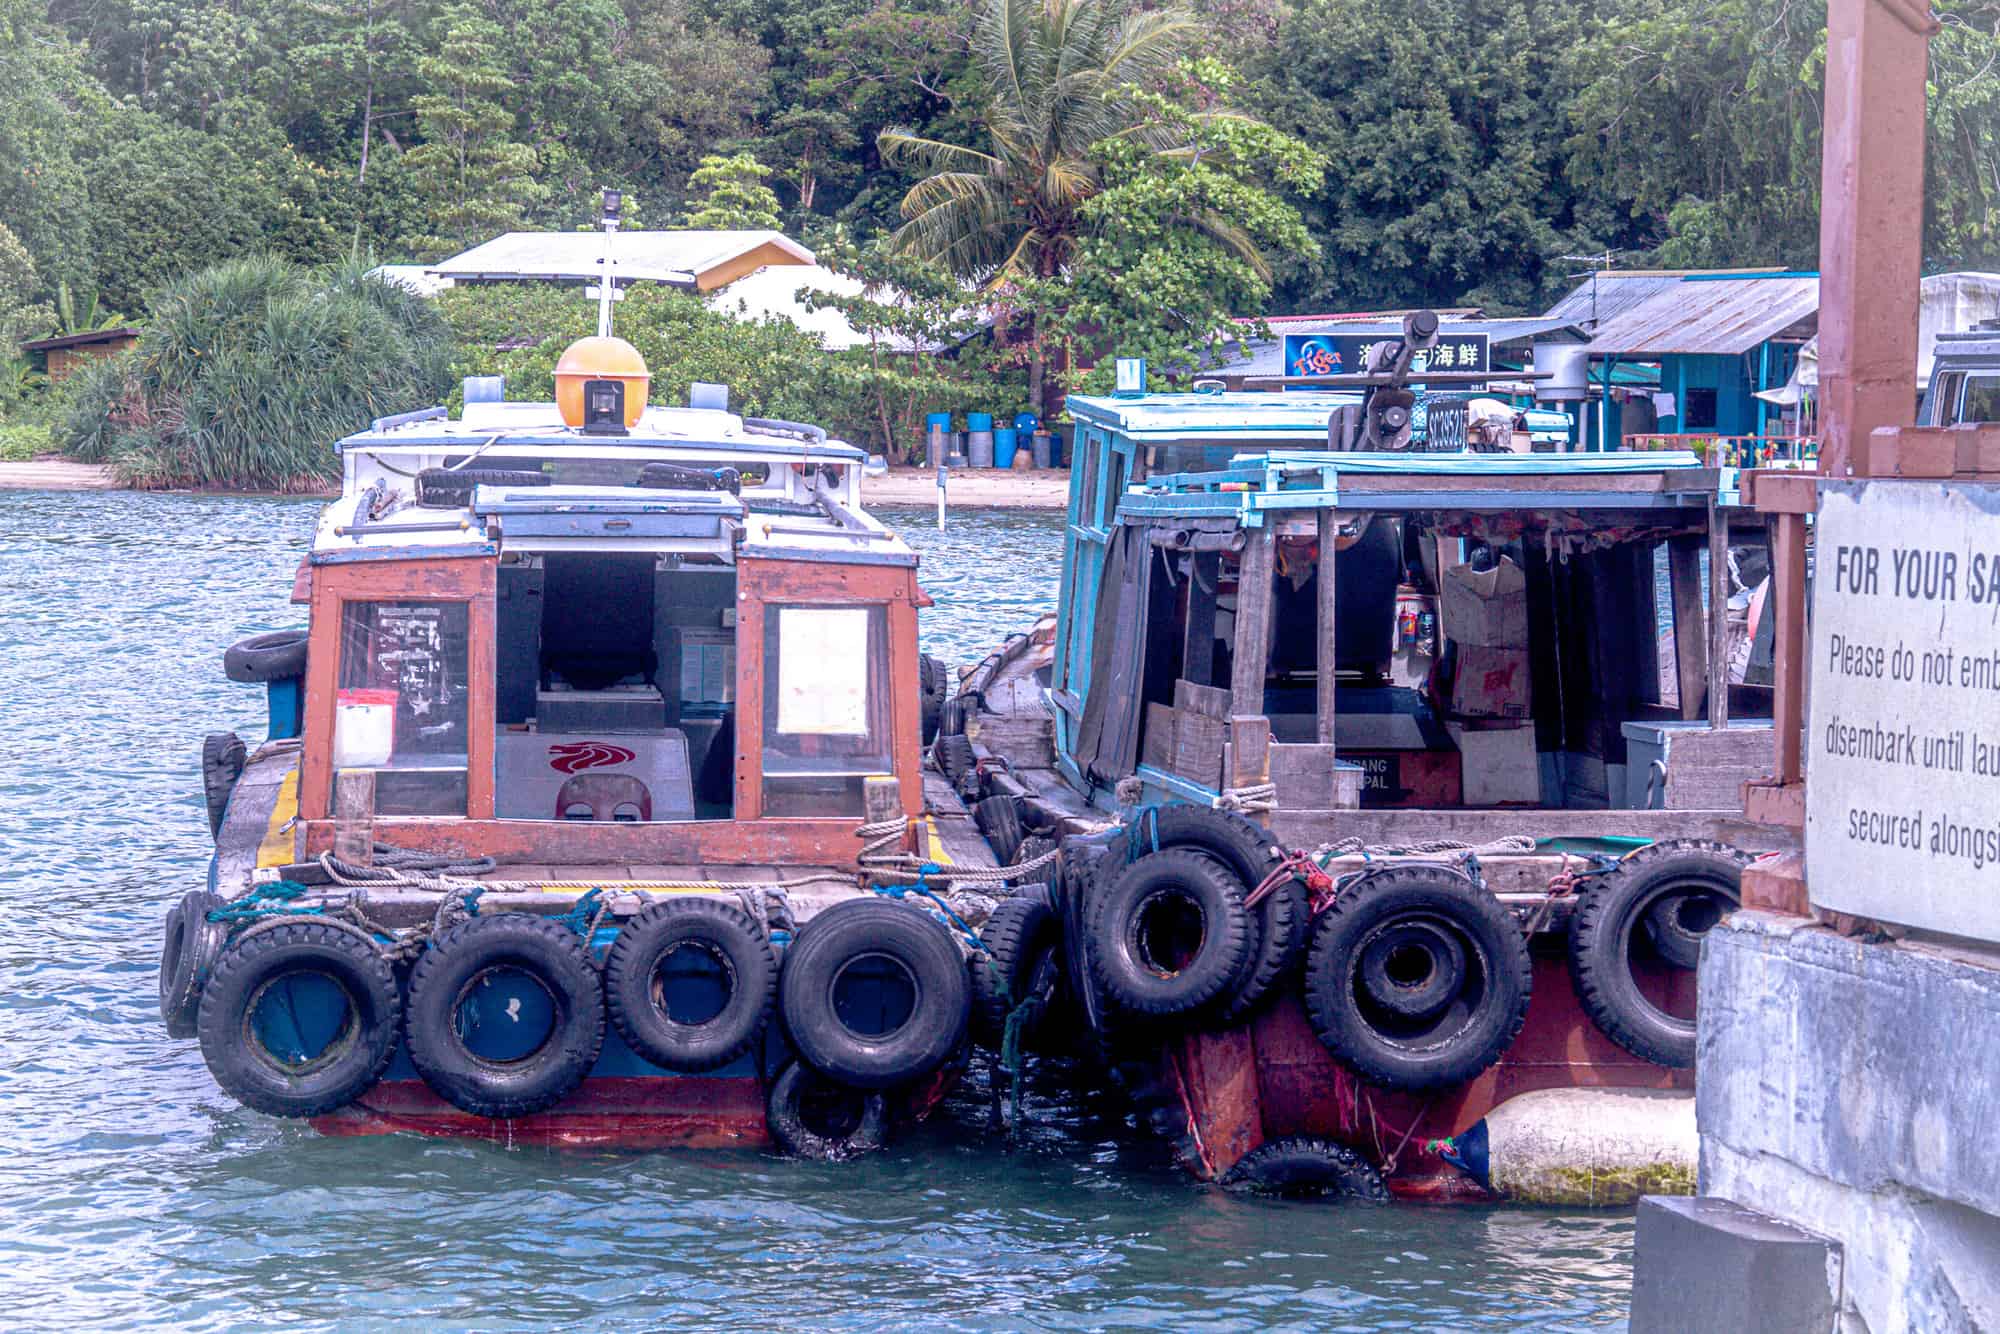 Singapore-Pulau Ubin boats on the water